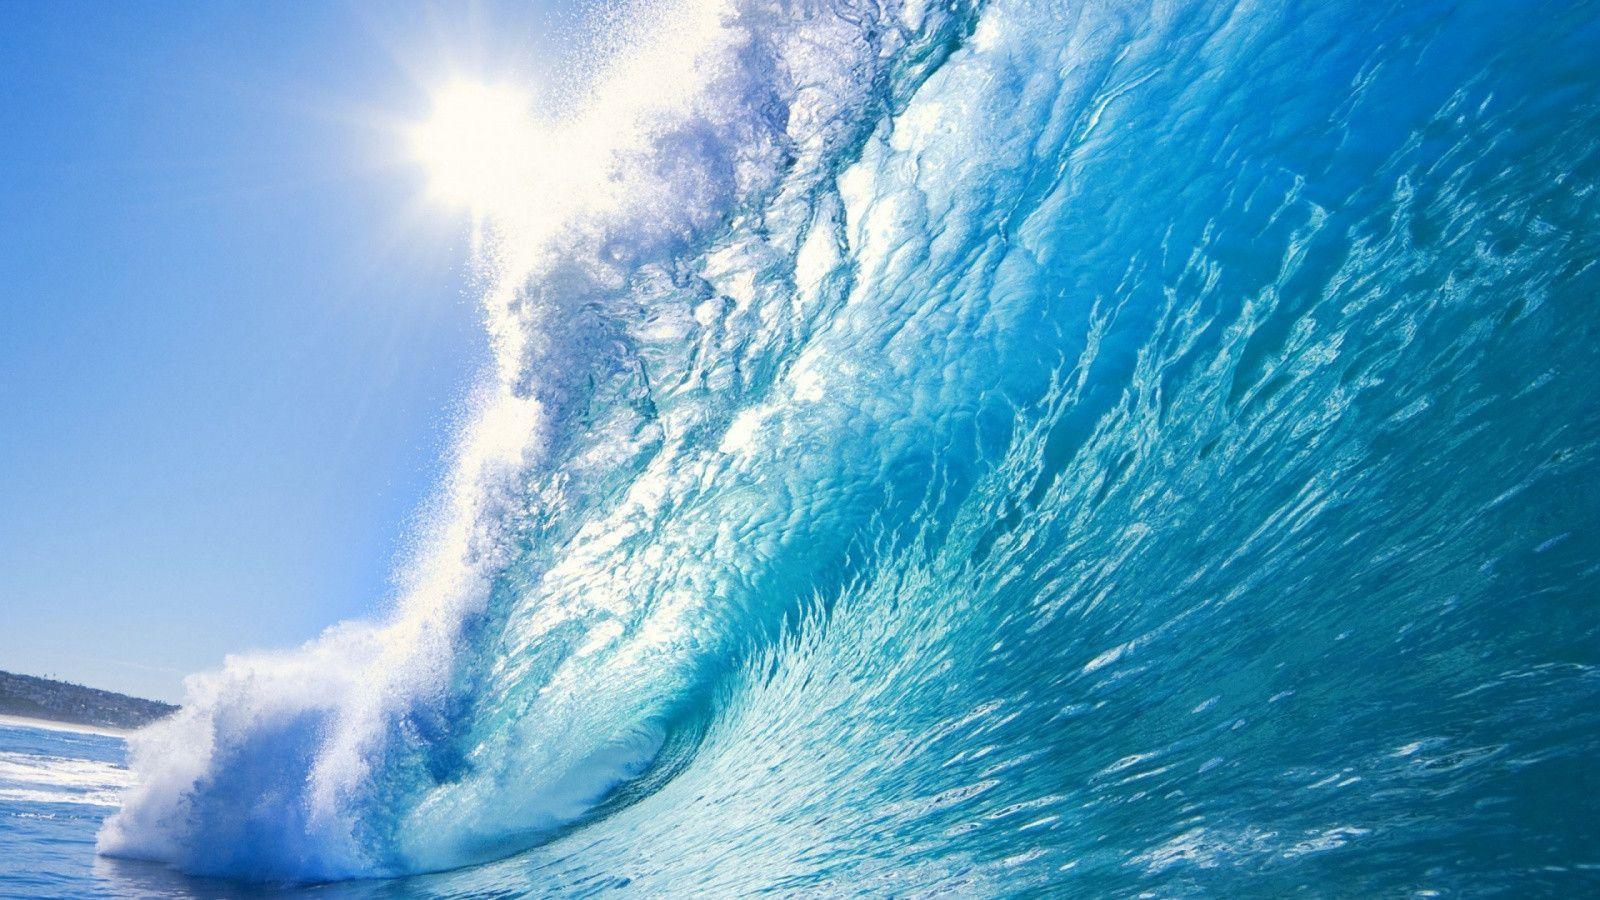 Ocean Waves background in 1600x900 resolution. HD & Widescreen